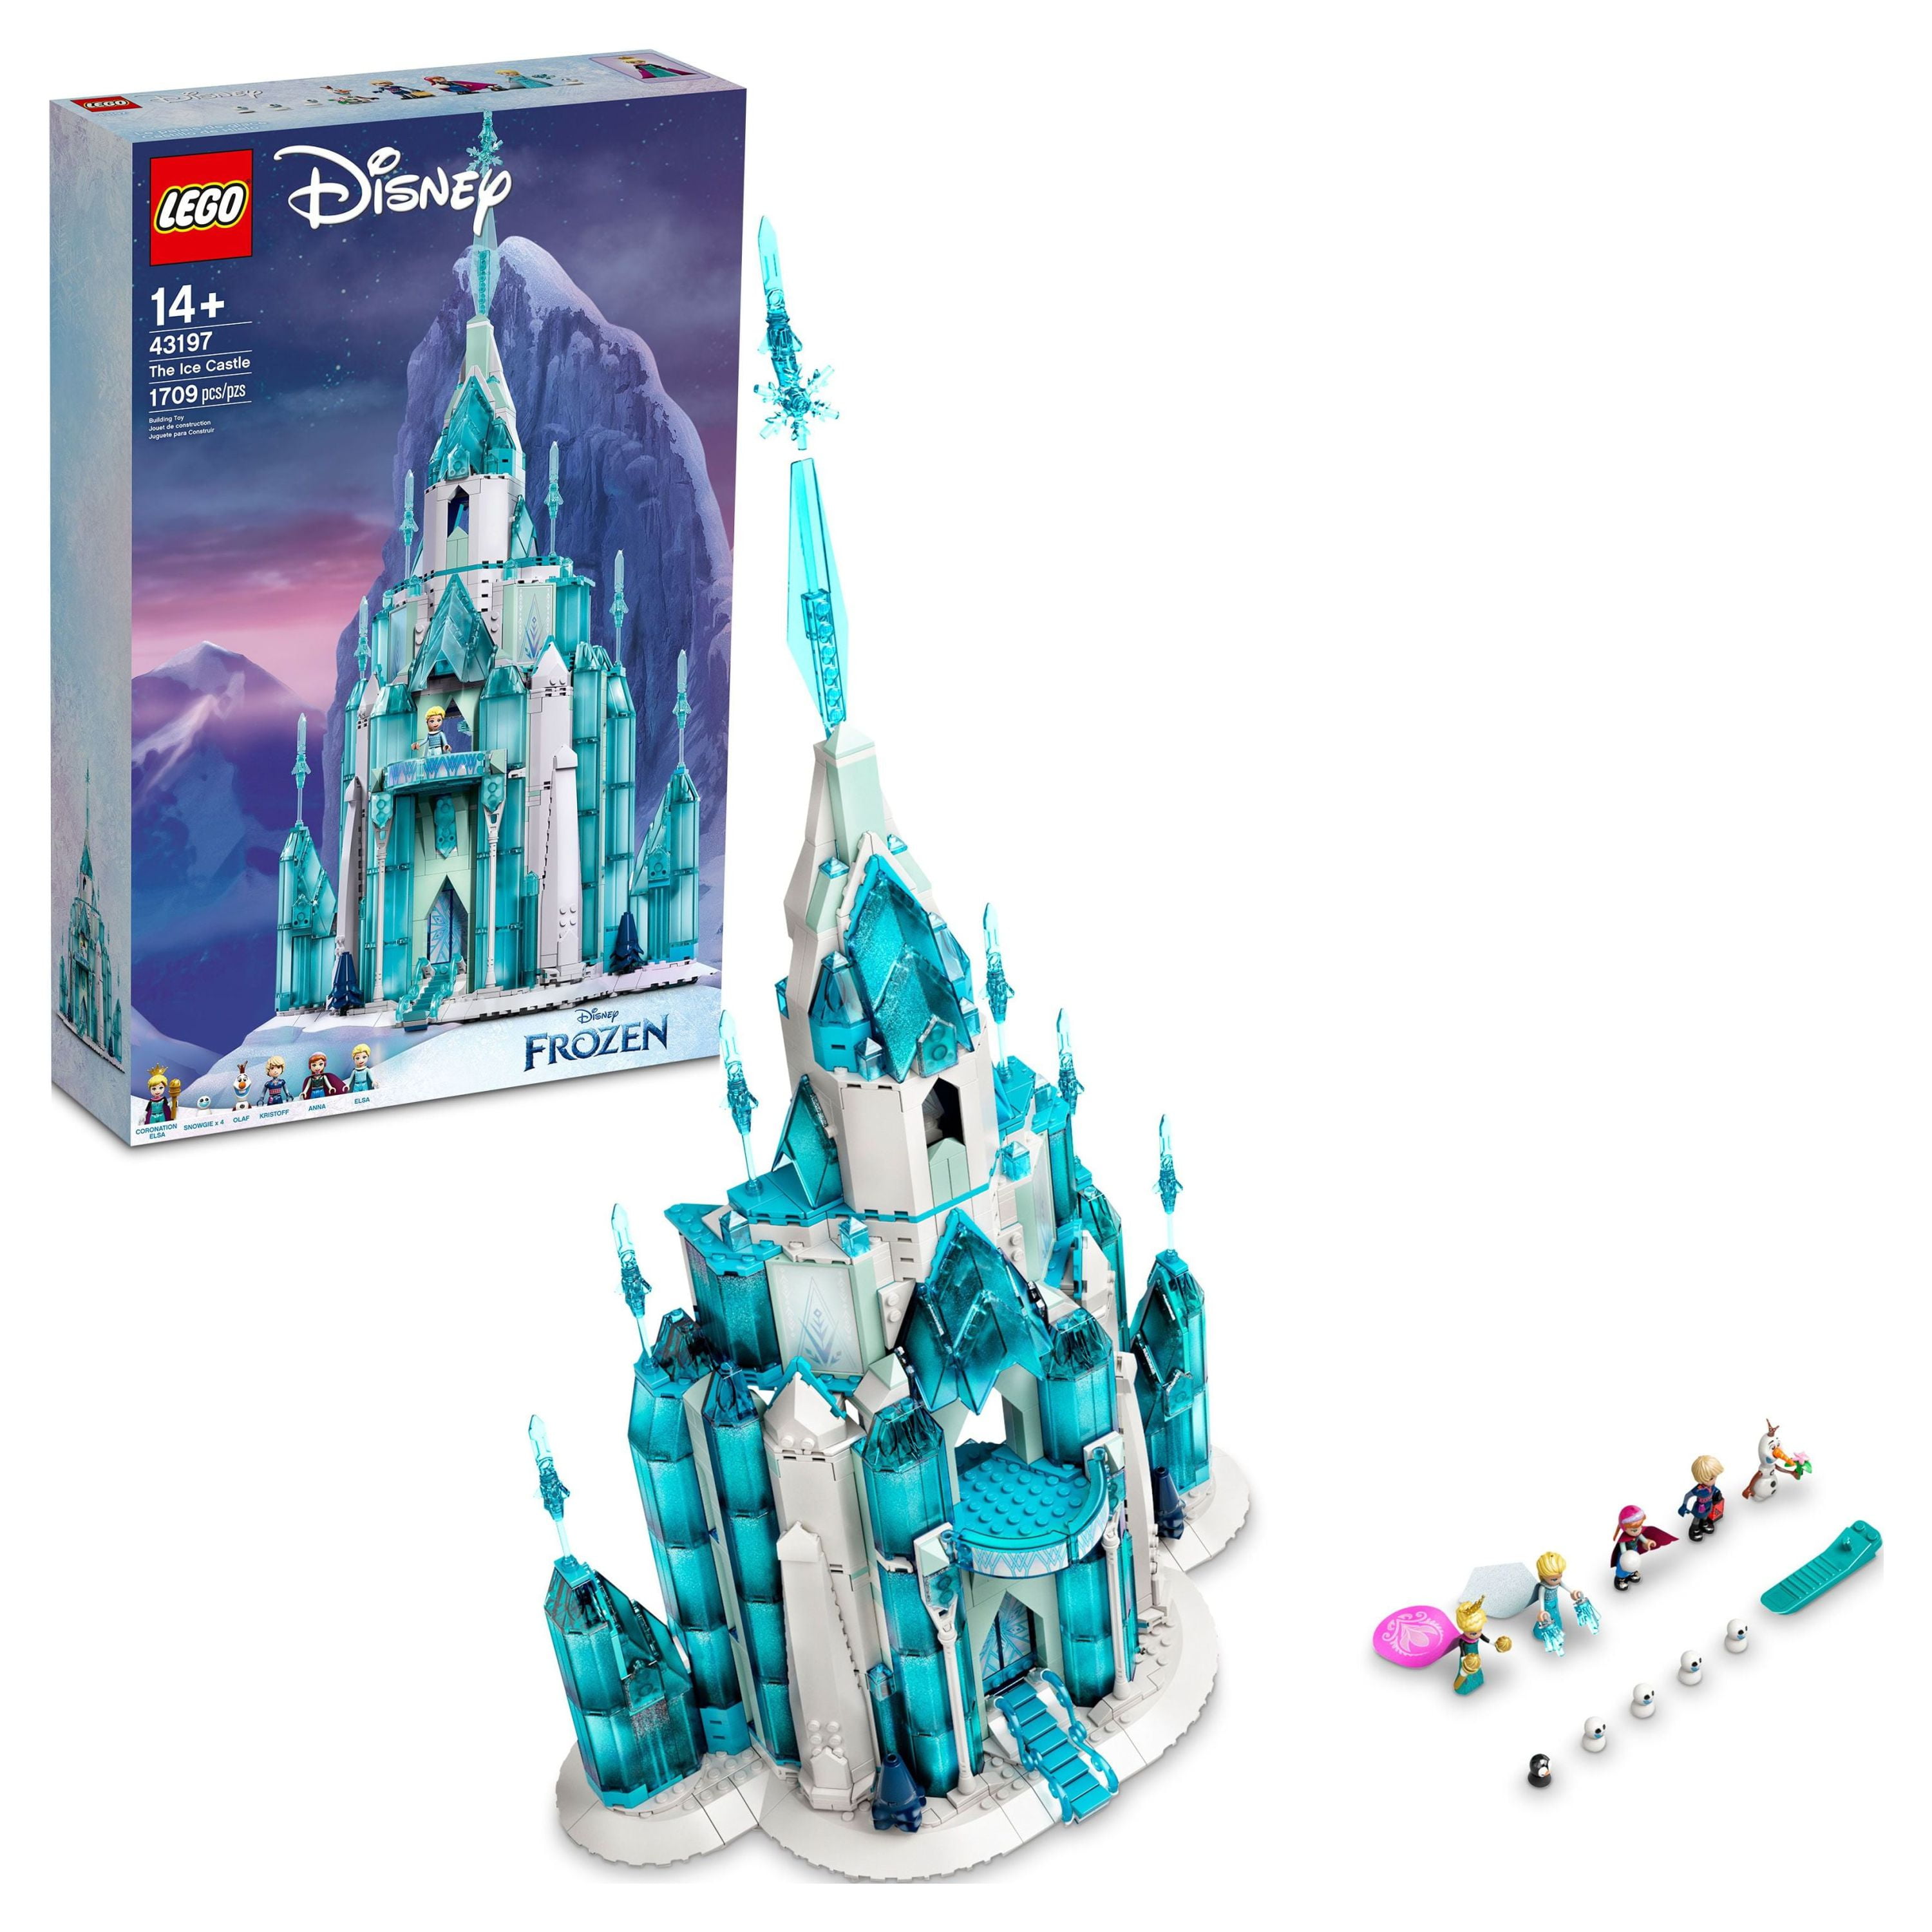 LEGO Disney Princess The Ice Castle Building Toy 43197 - $152.46